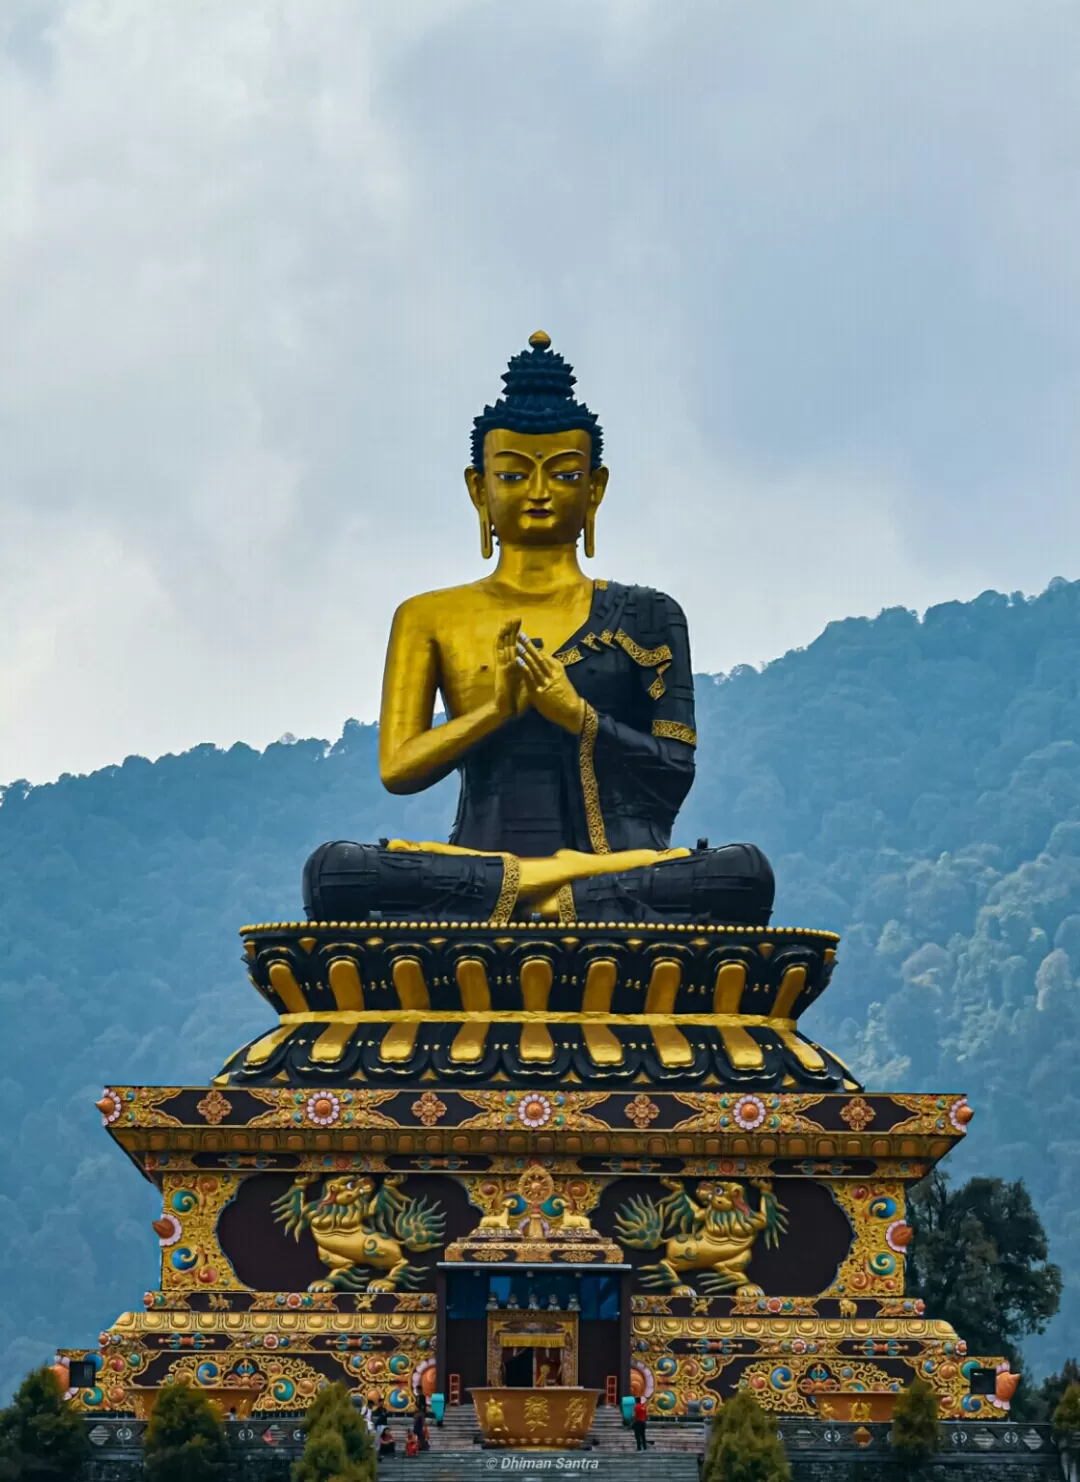 Photo of Tathagata Tsal (Buddha Park) By Dr. Dhiman Santra